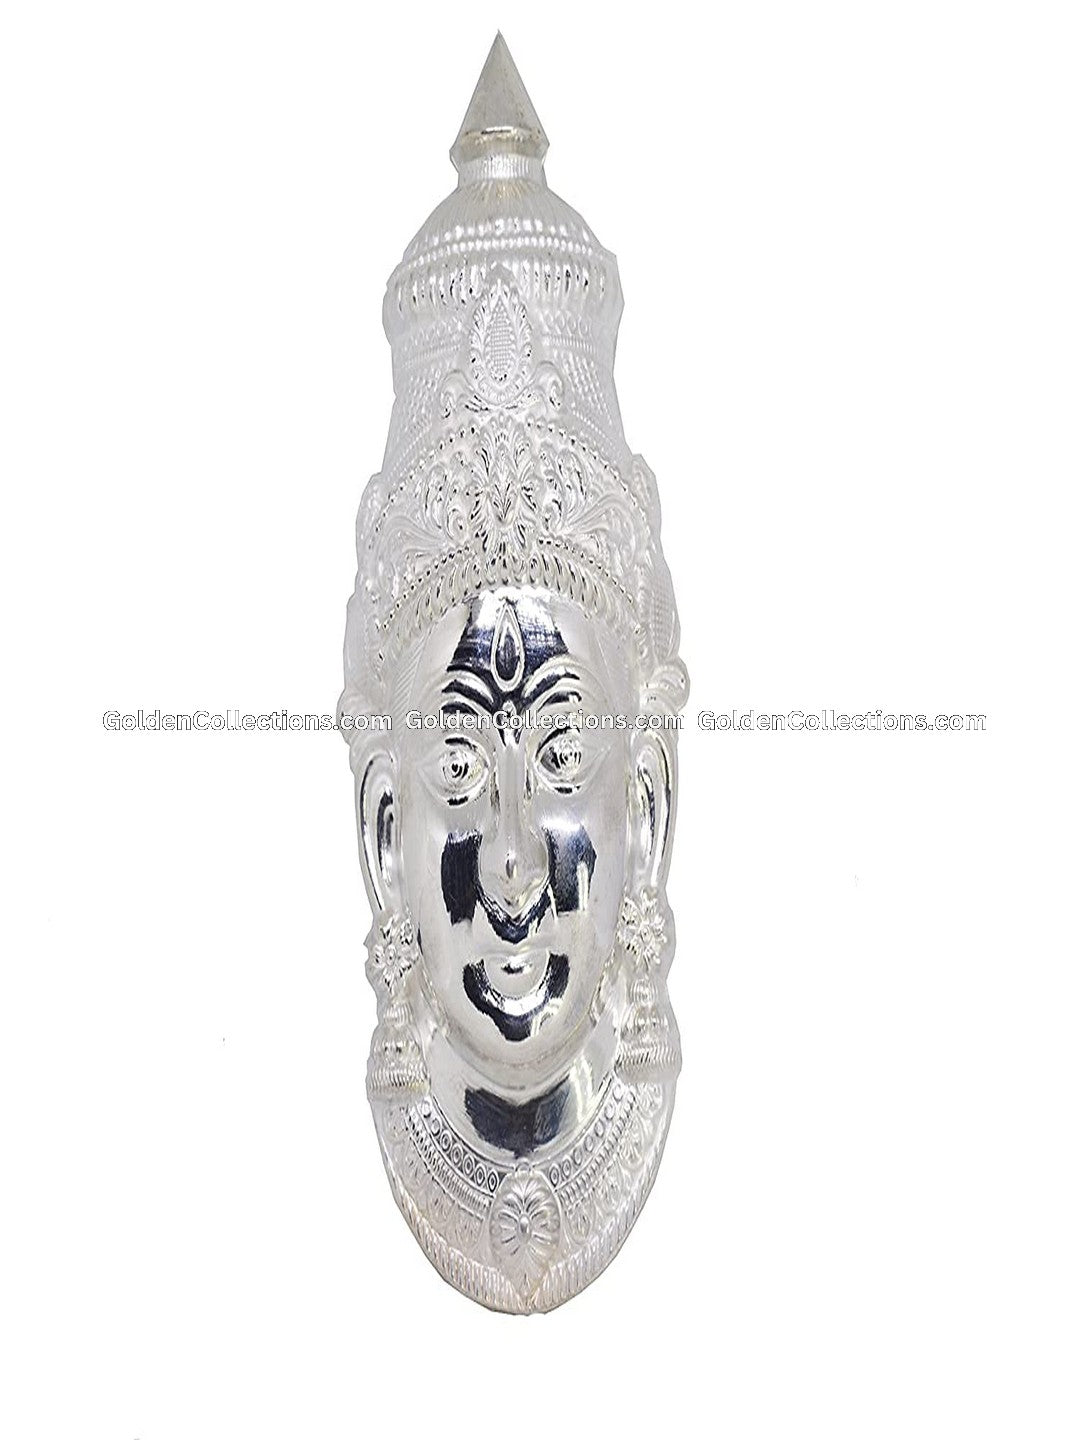 Varalakshmi Amman Face in Silver - GoldenCollections VDF-016 2